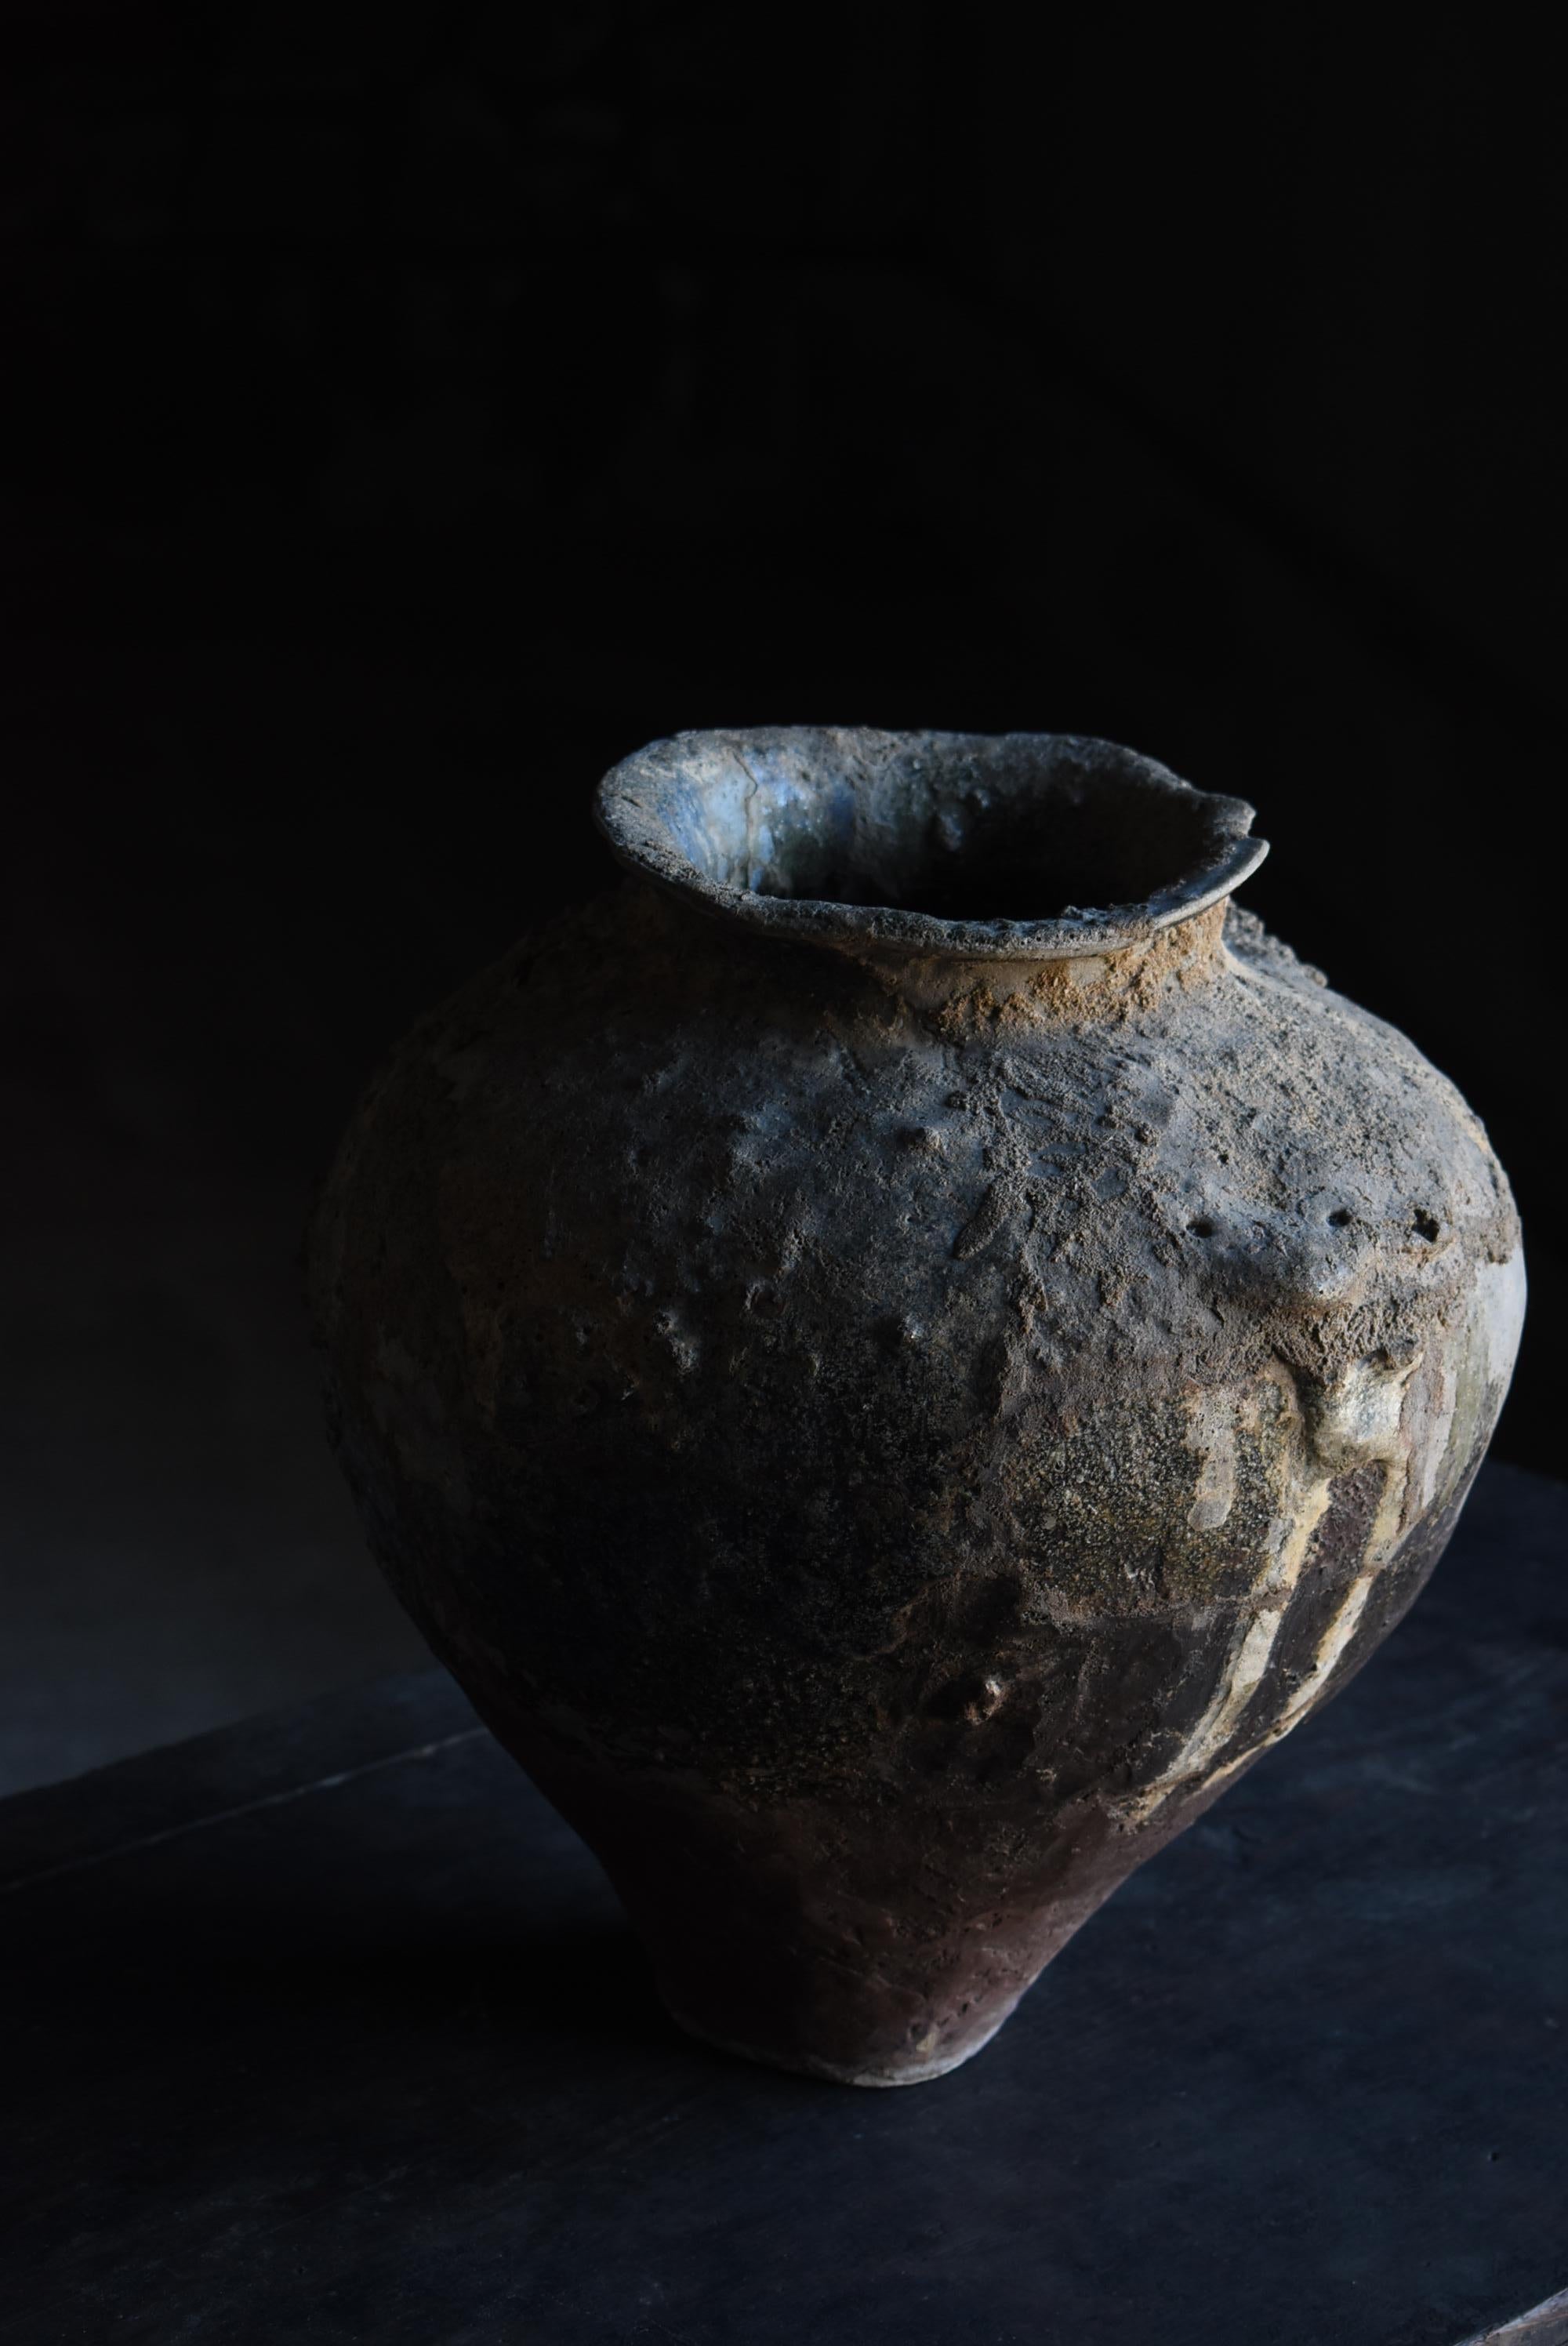 Edo Japanese Antique Pottery Vase / Flower Vase Vessel Jar Wabisabi